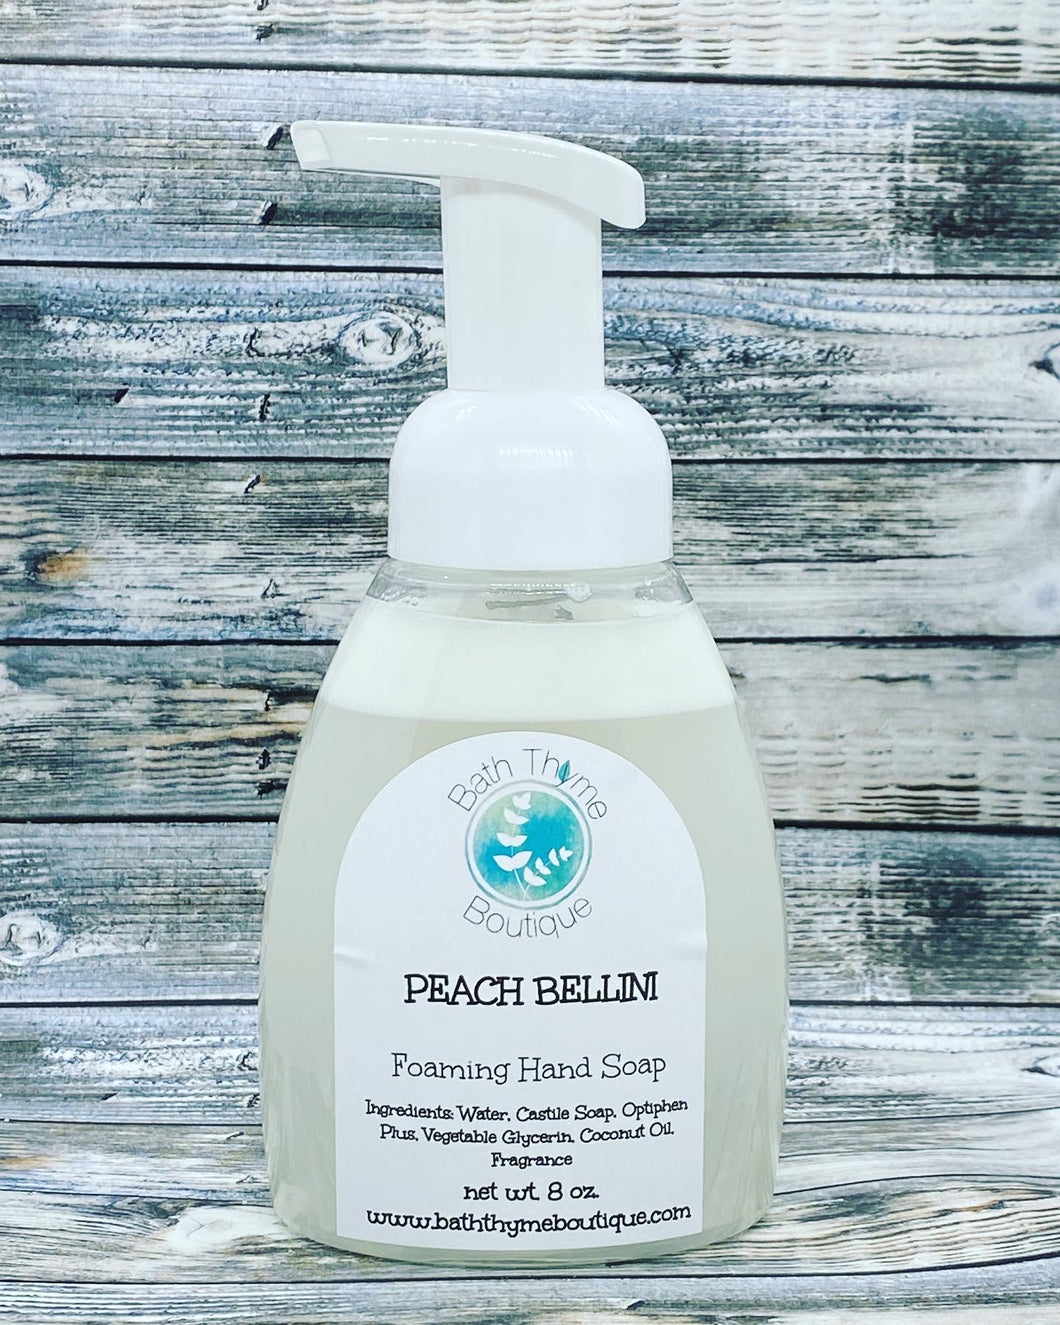 Peach Bellini Foaming Hand Soap